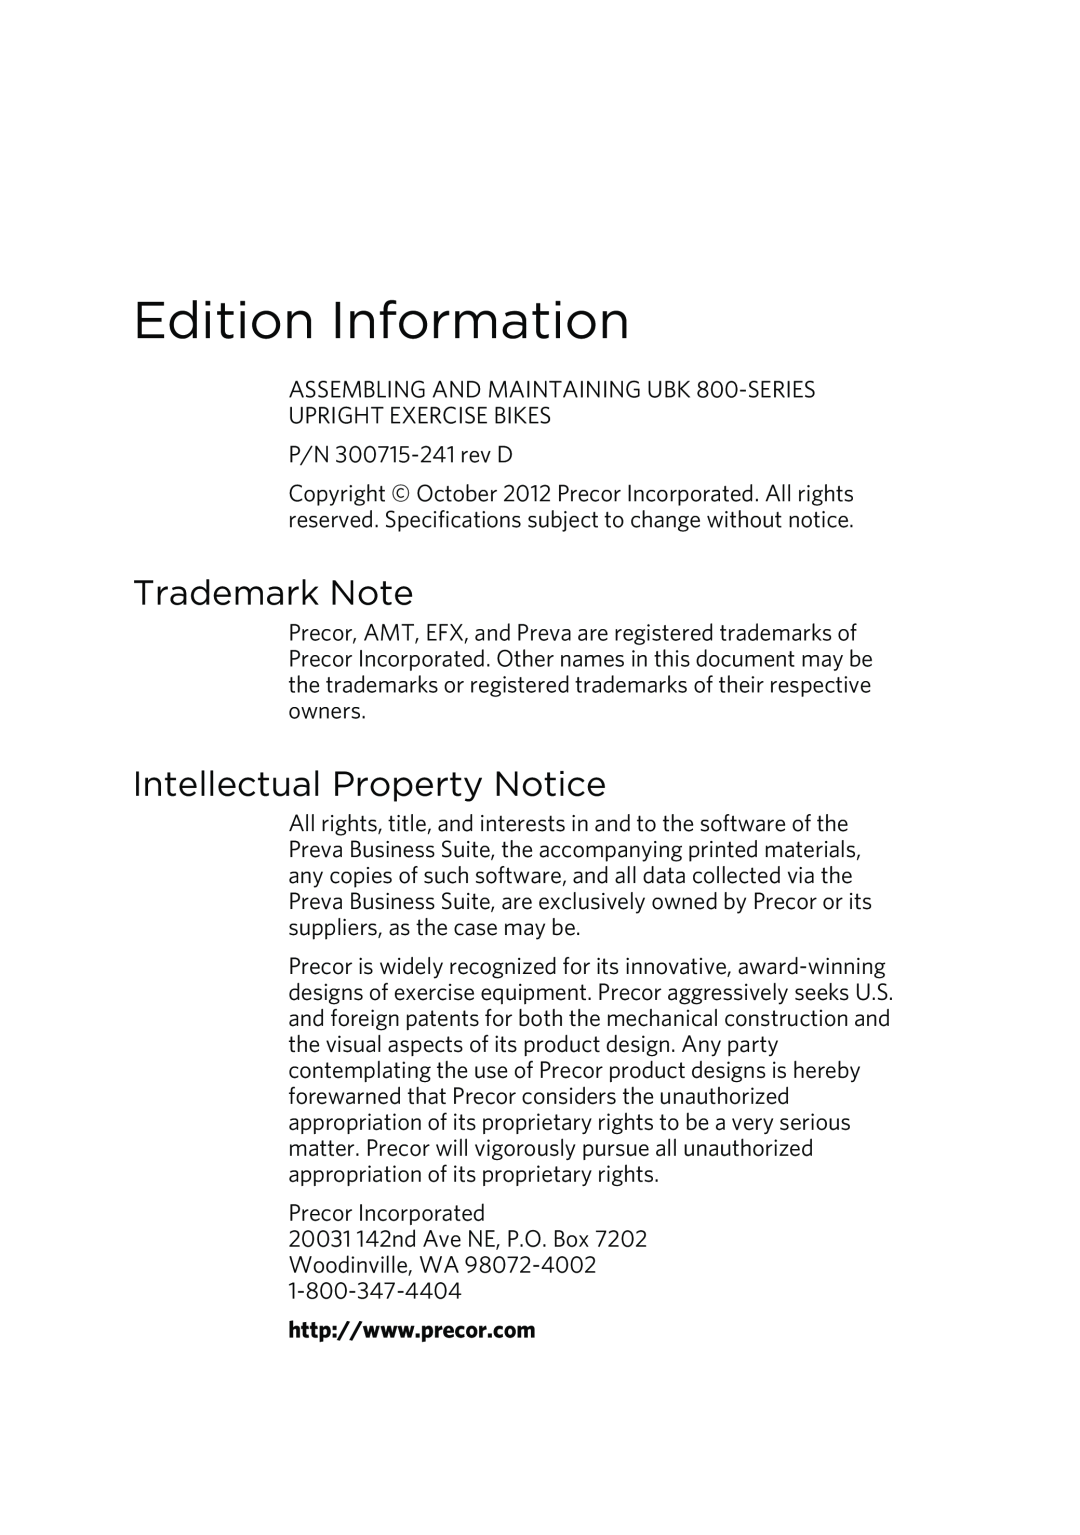 Precor P80 manual Edition Information, Trademark Note, Intellectual Property Notice, P/N 300715-241rev D 